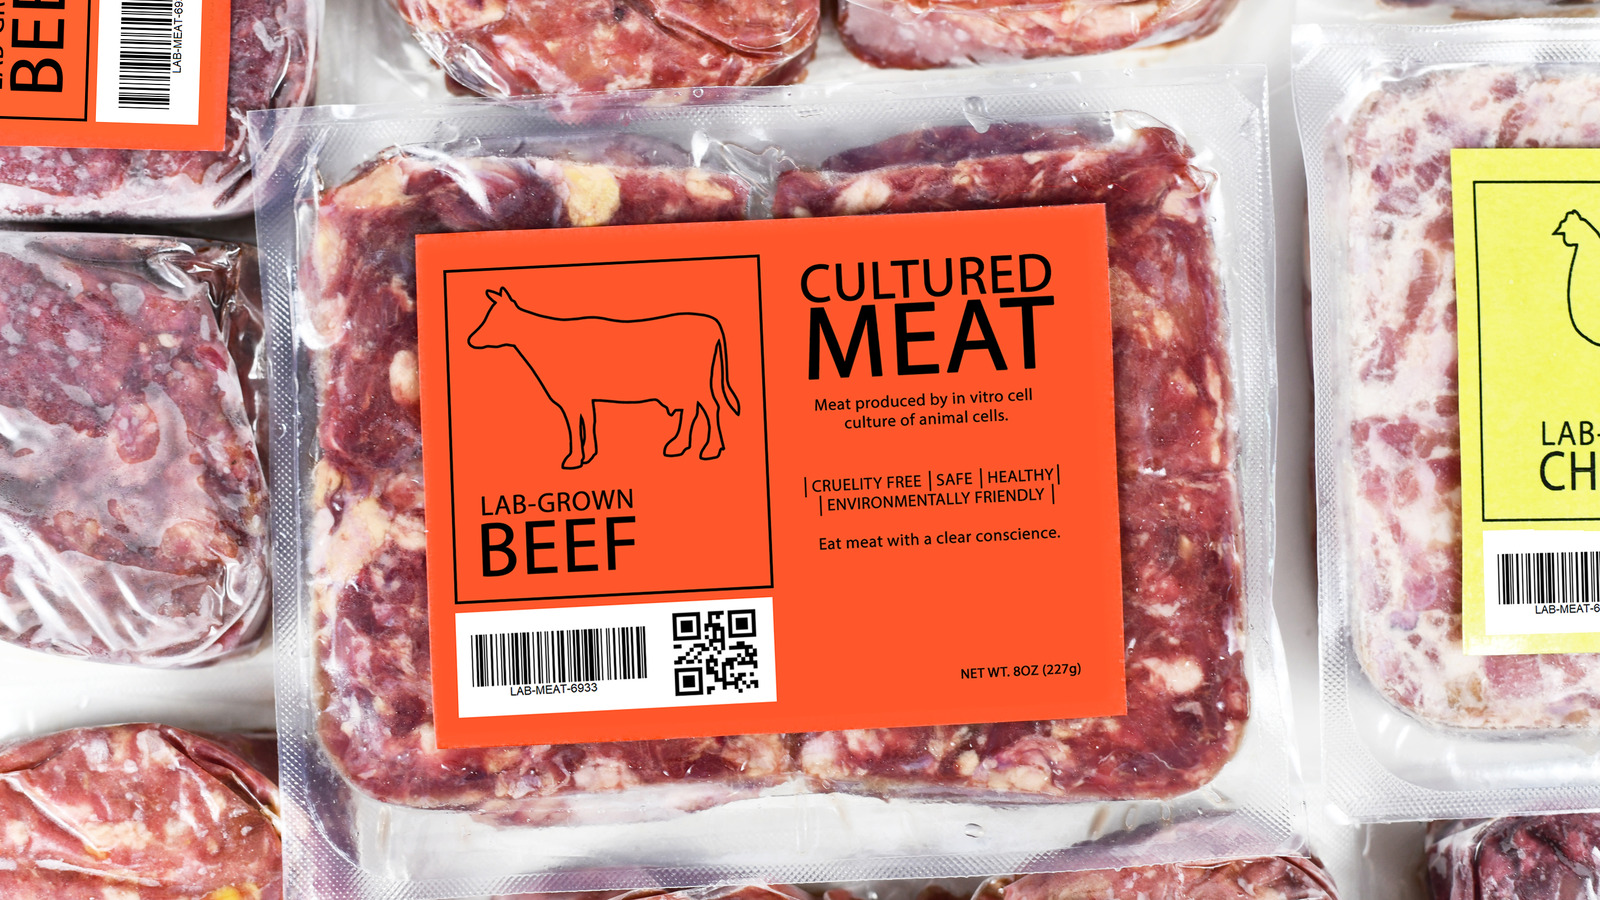 https://www.tastingtable.com/img/gallery/the-debate-on-how-to-classify-lab-grown-meat-is-raging/l-intro-1654045512.jpg